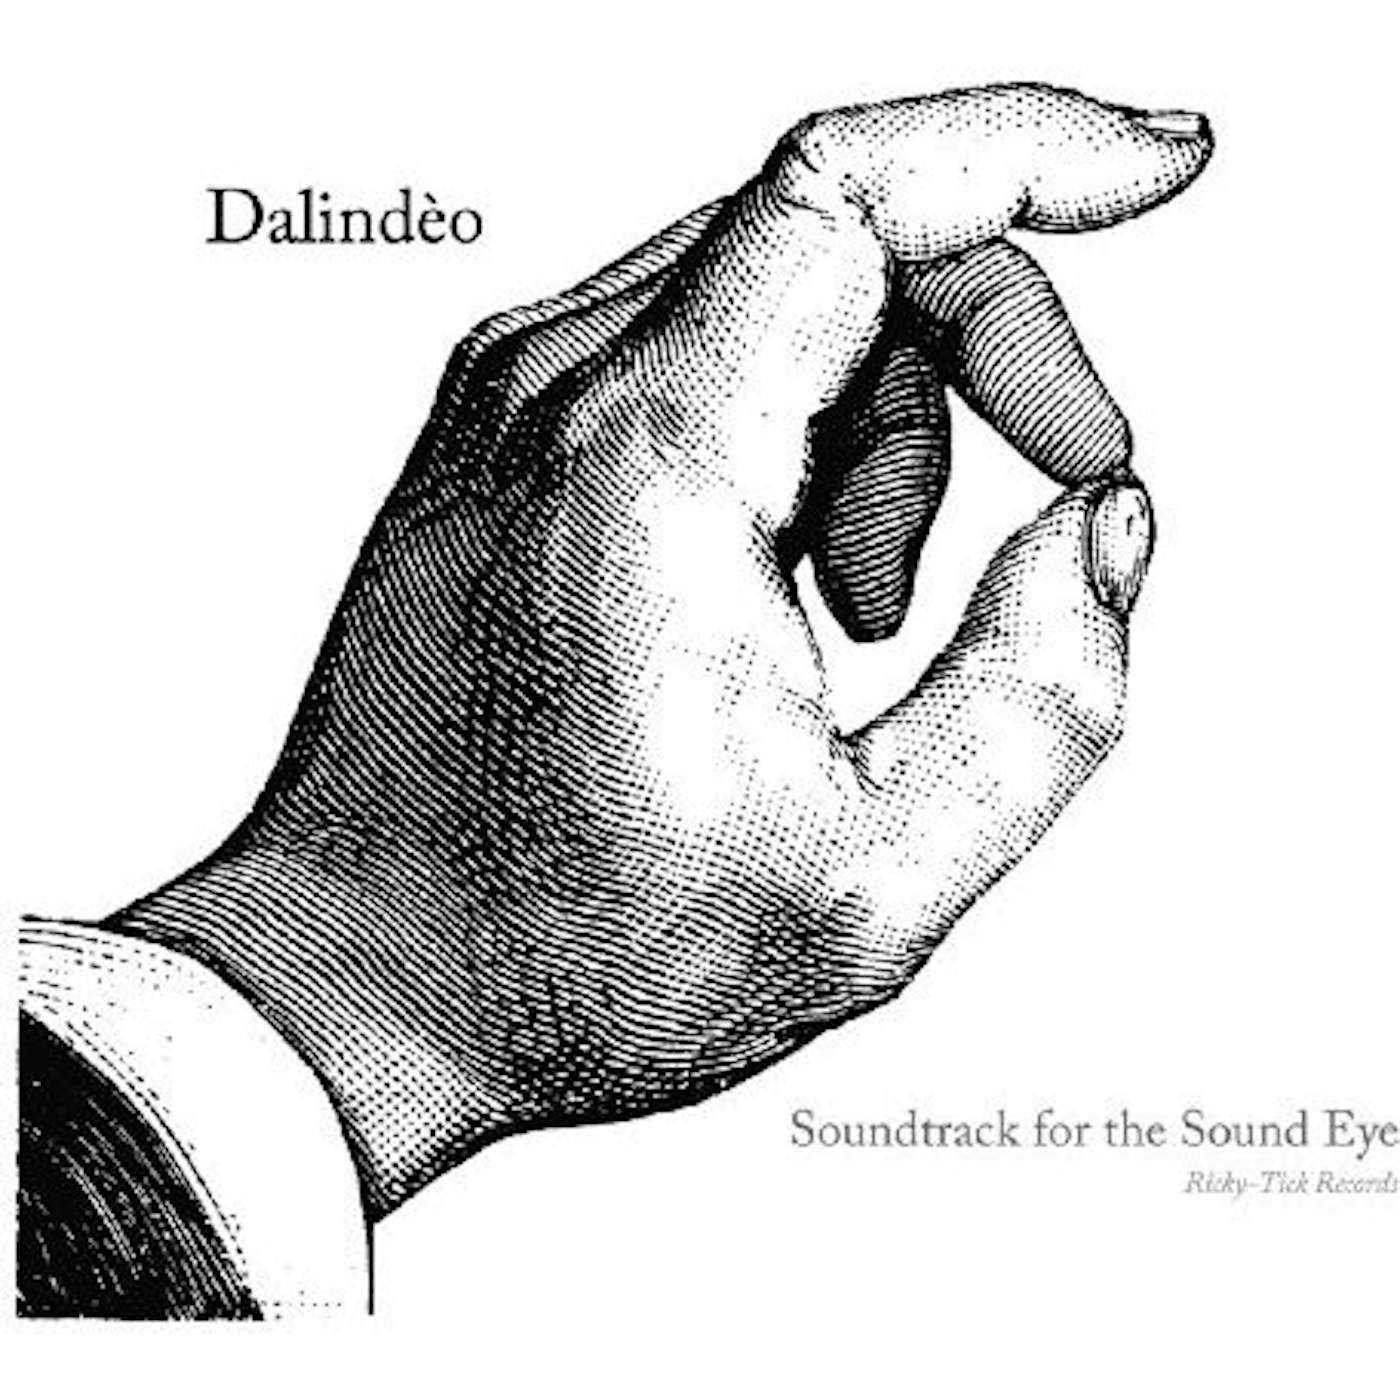 Dalindéo SOUNDTRACK FOR THE SOUND EYE Vinyl Record - UK Release